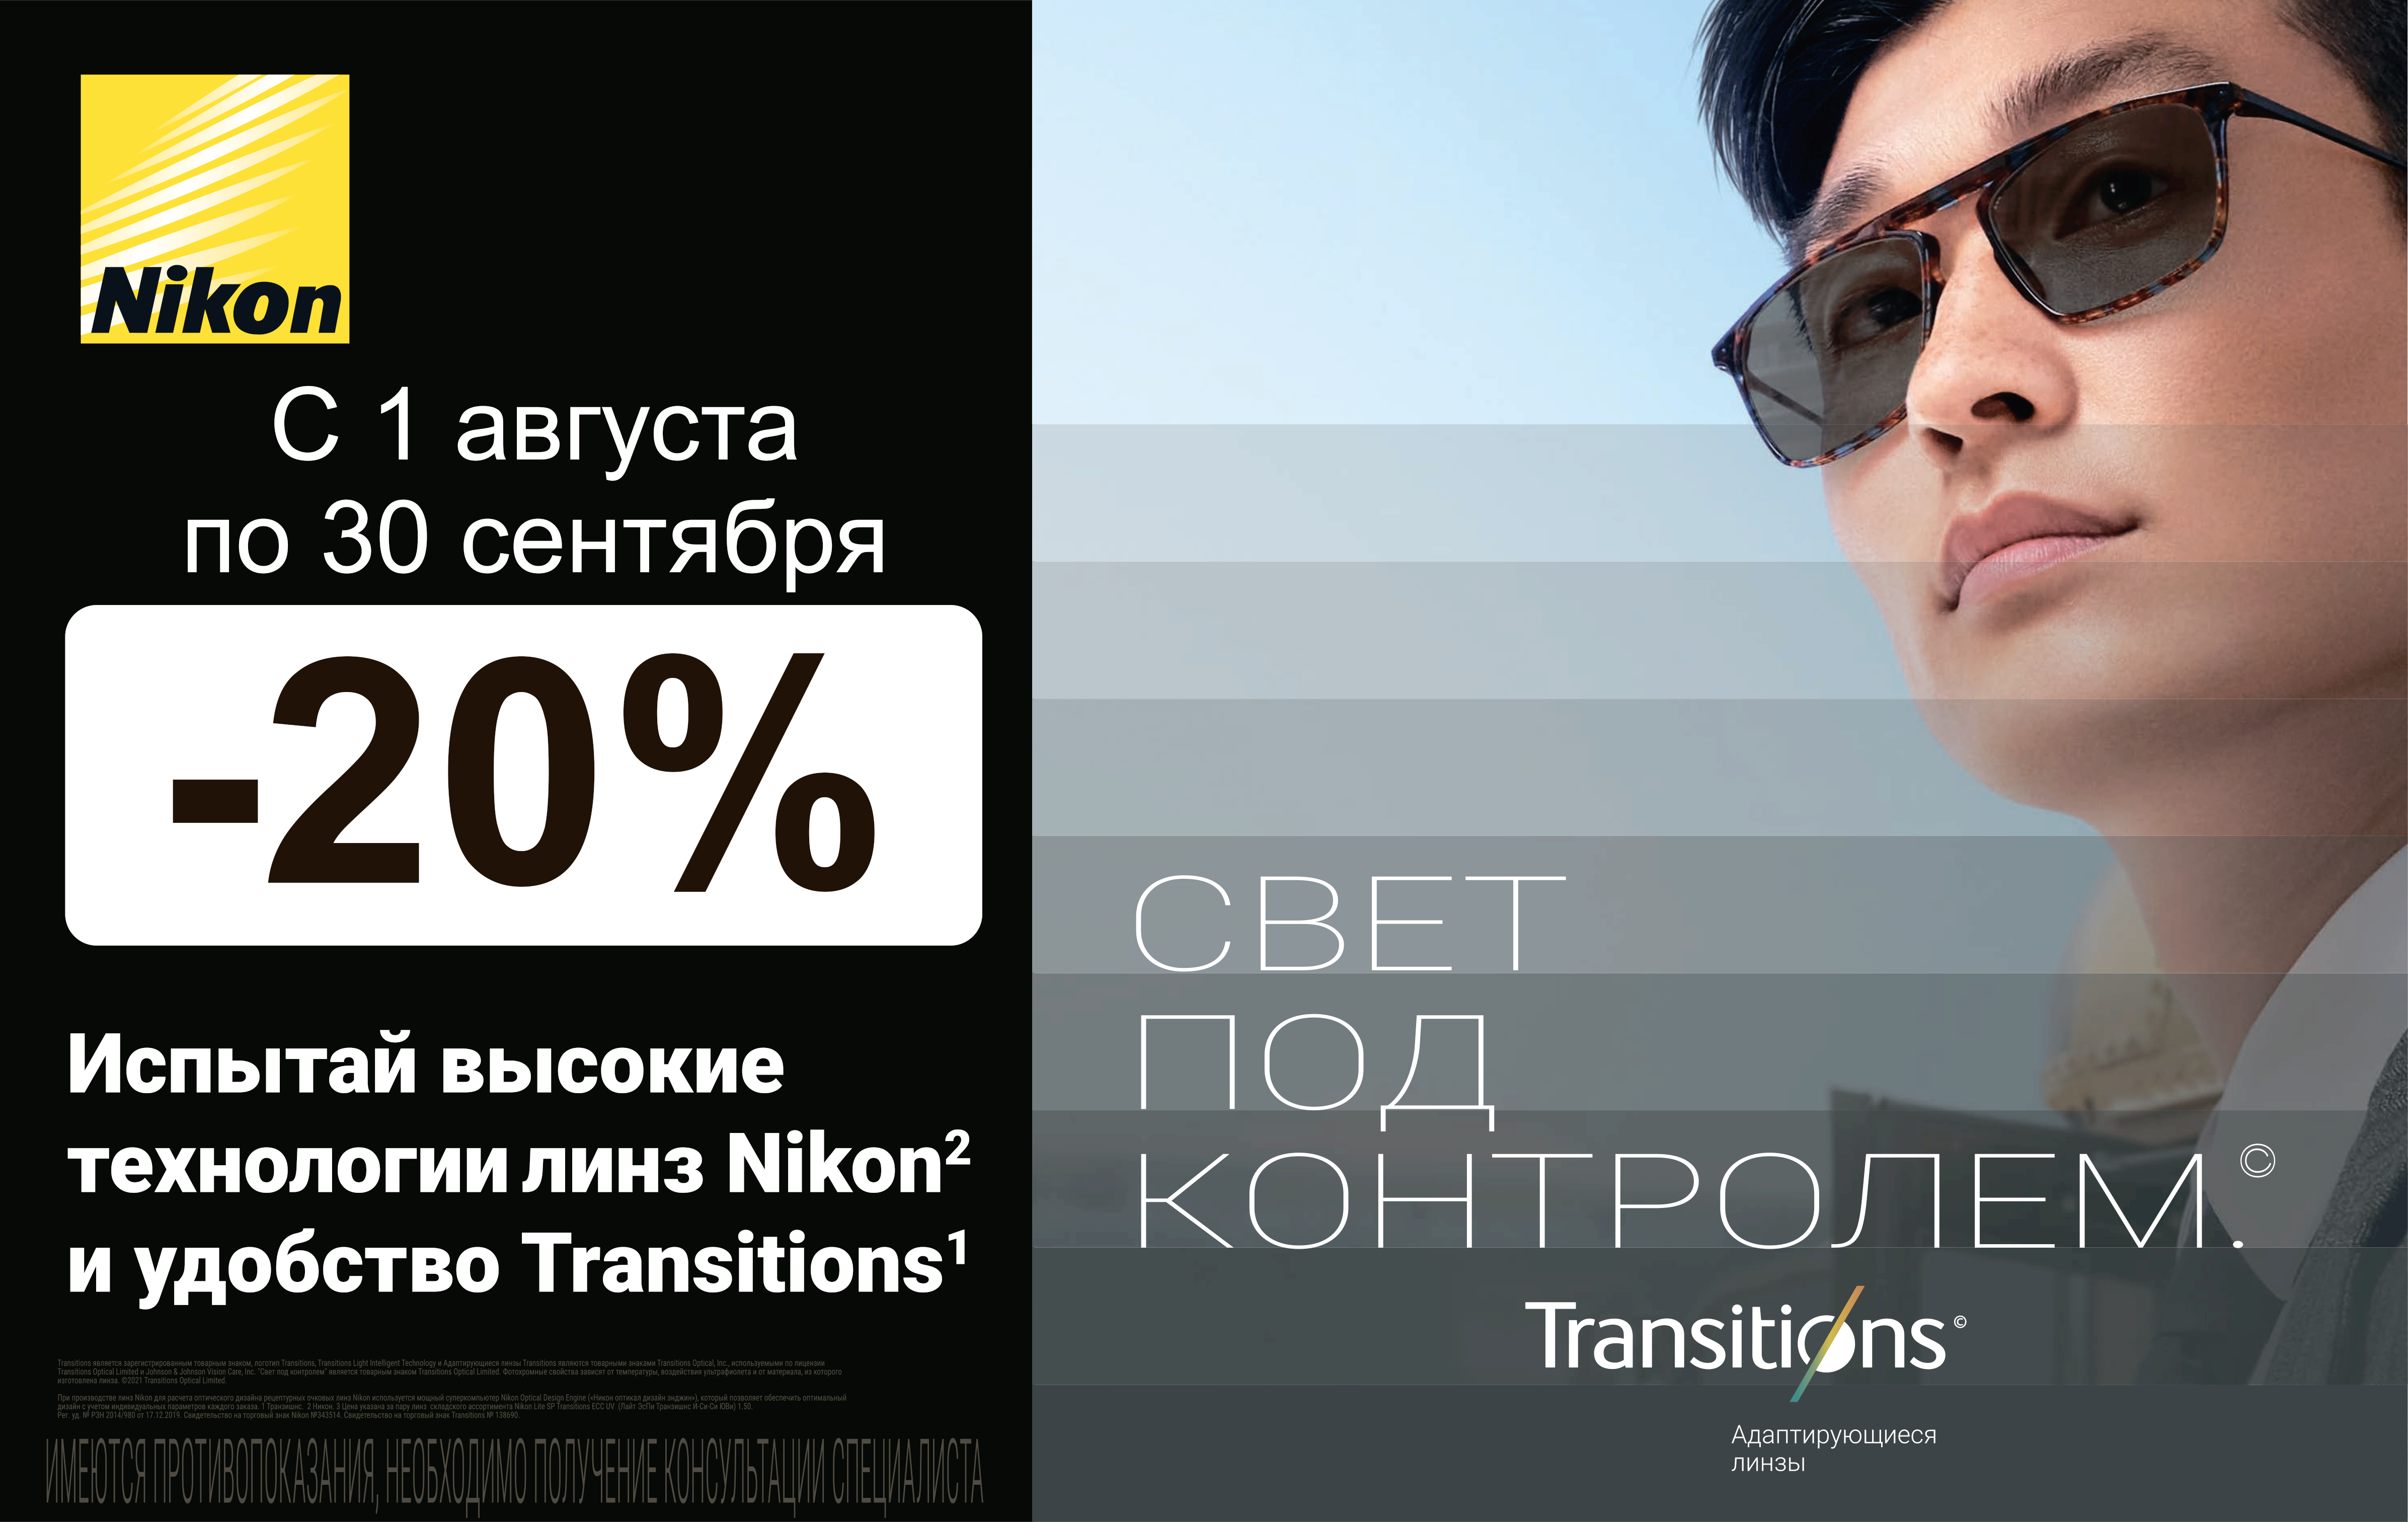 Nikon Transitions 201